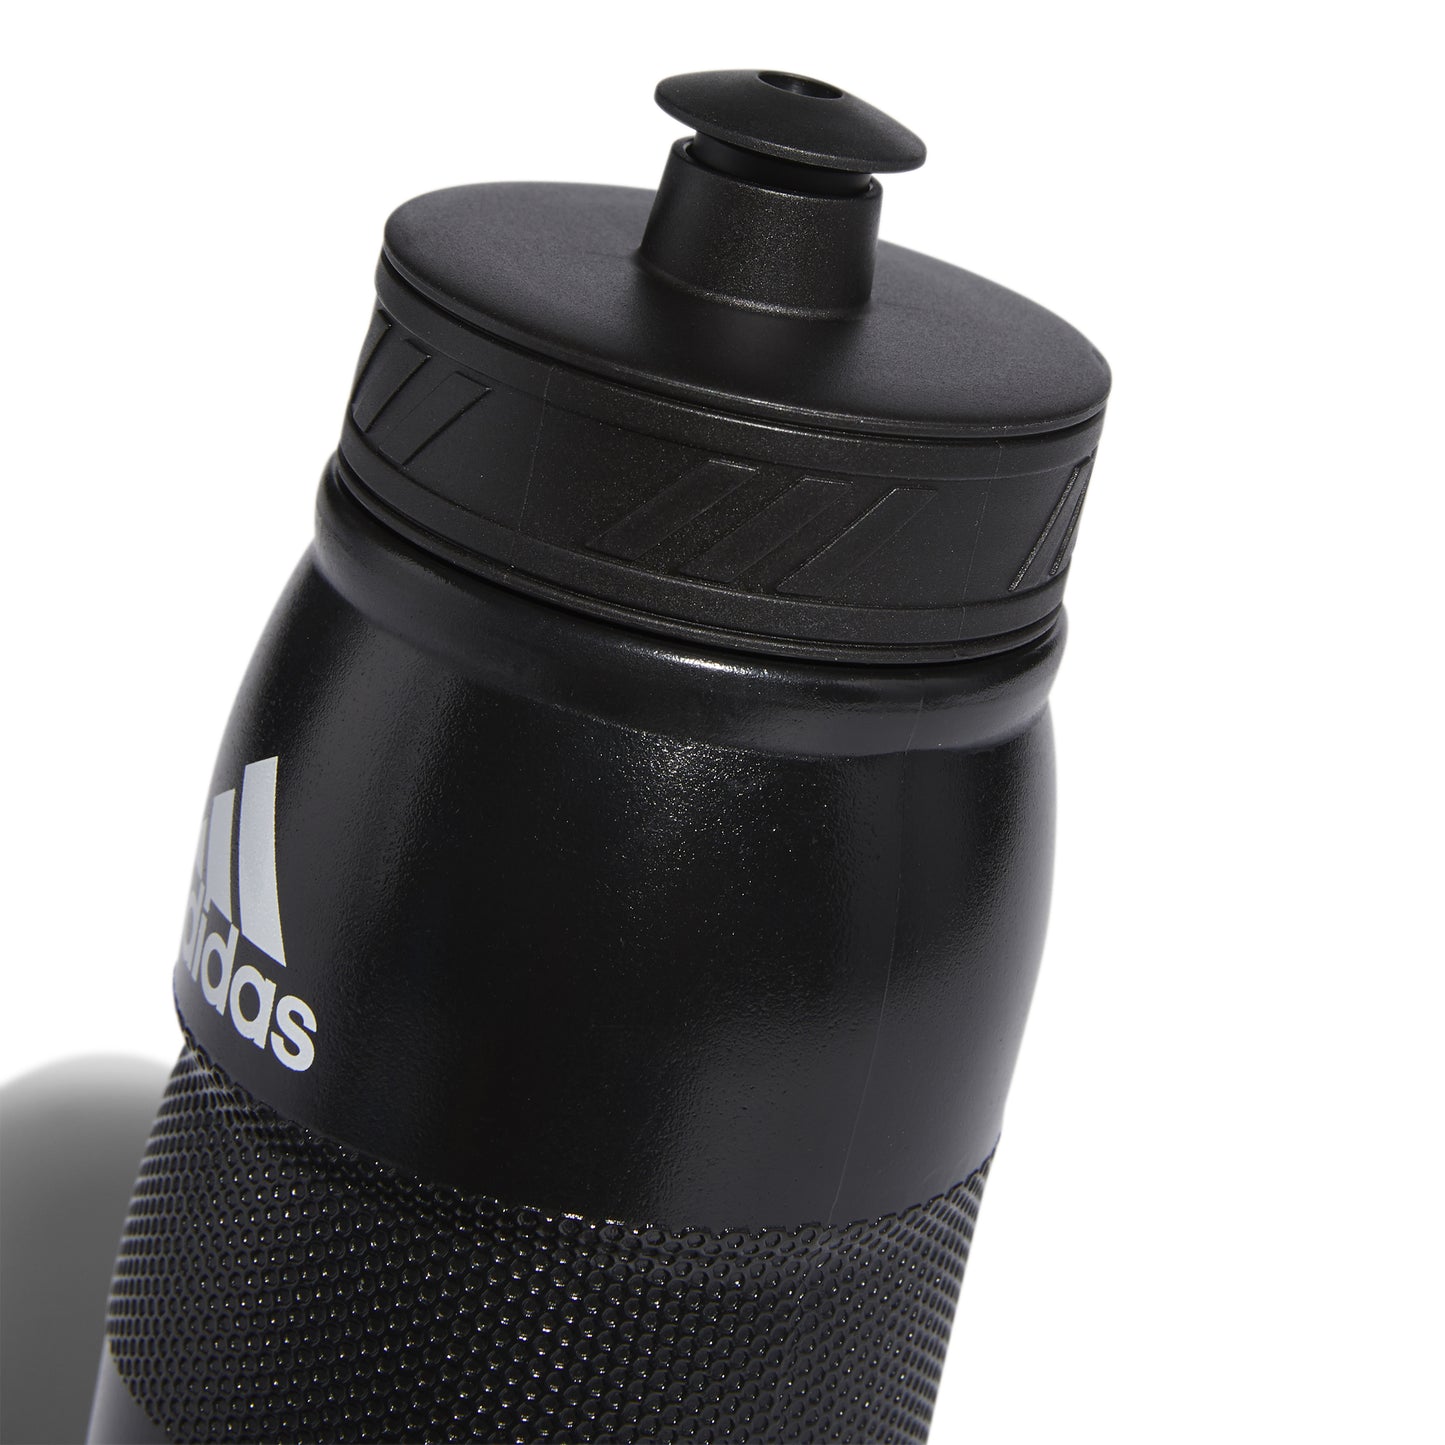 adidas Stadium 26 oz Plastic Water Bottle Black